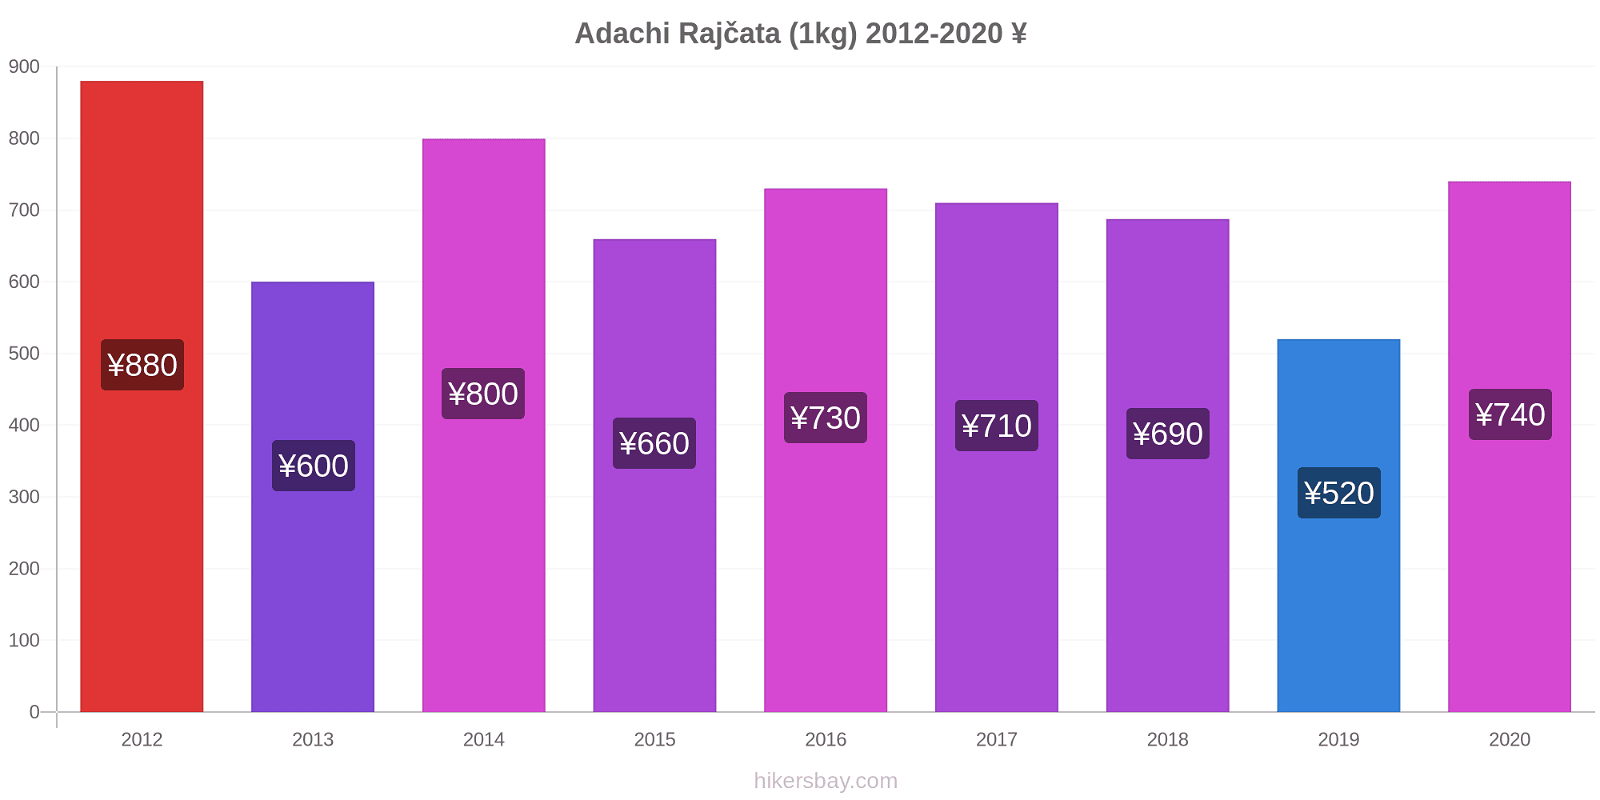 Adachi změny cen Rajčata (1kg) hikersbay.com